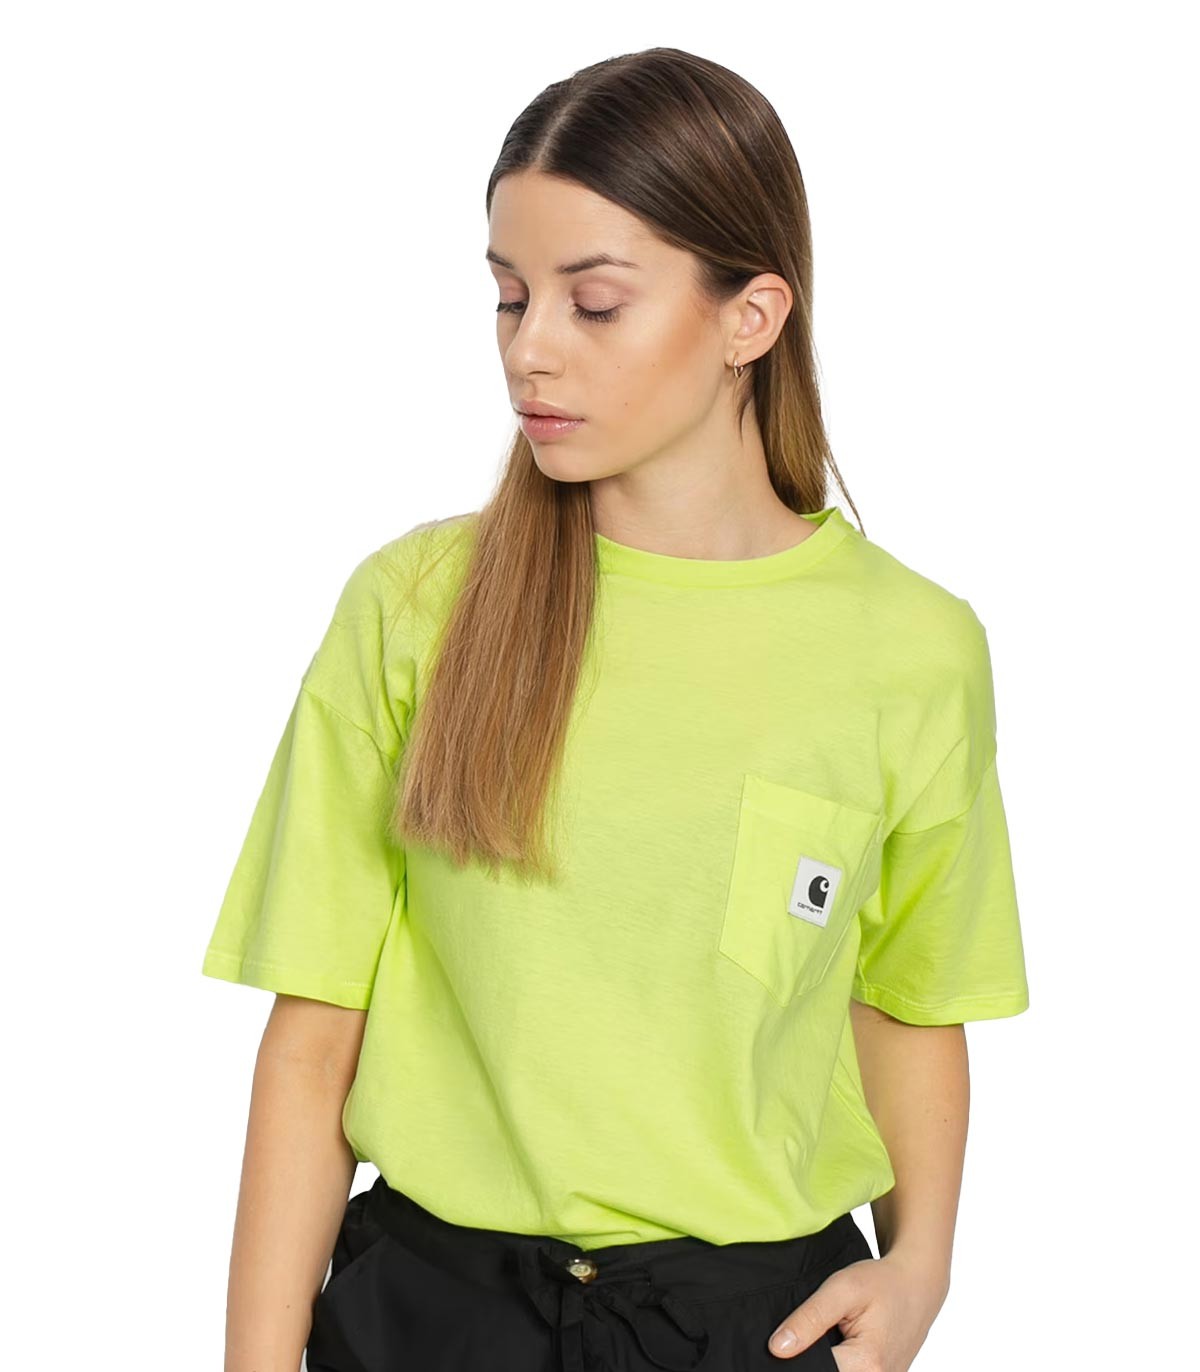 Carhartt Wip - Camiseta con Bolsillo - Verde